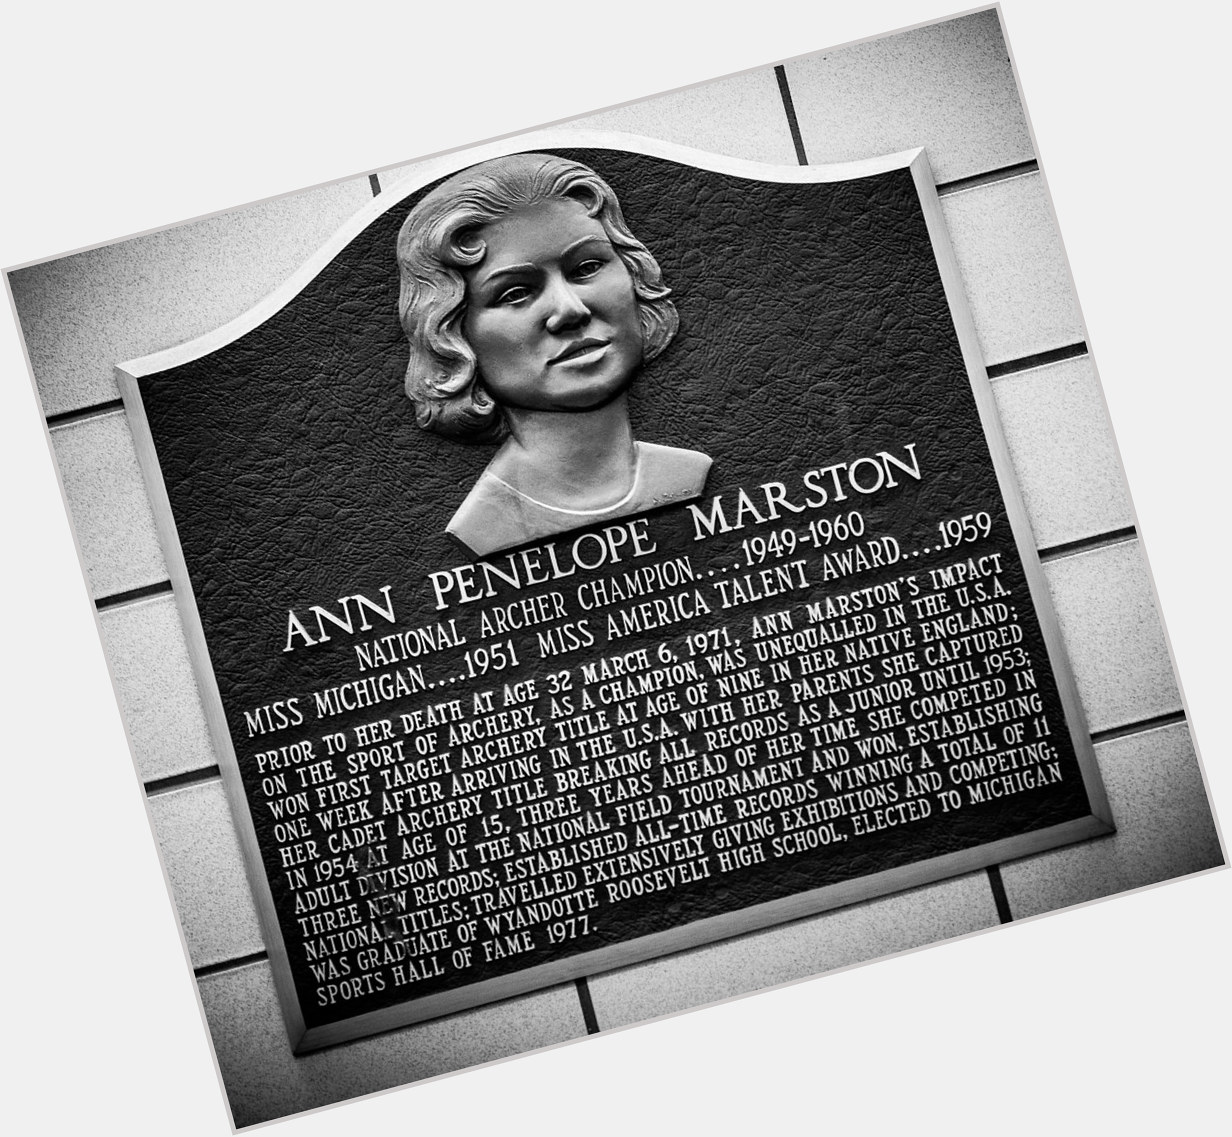 Ann Penelope Marston  